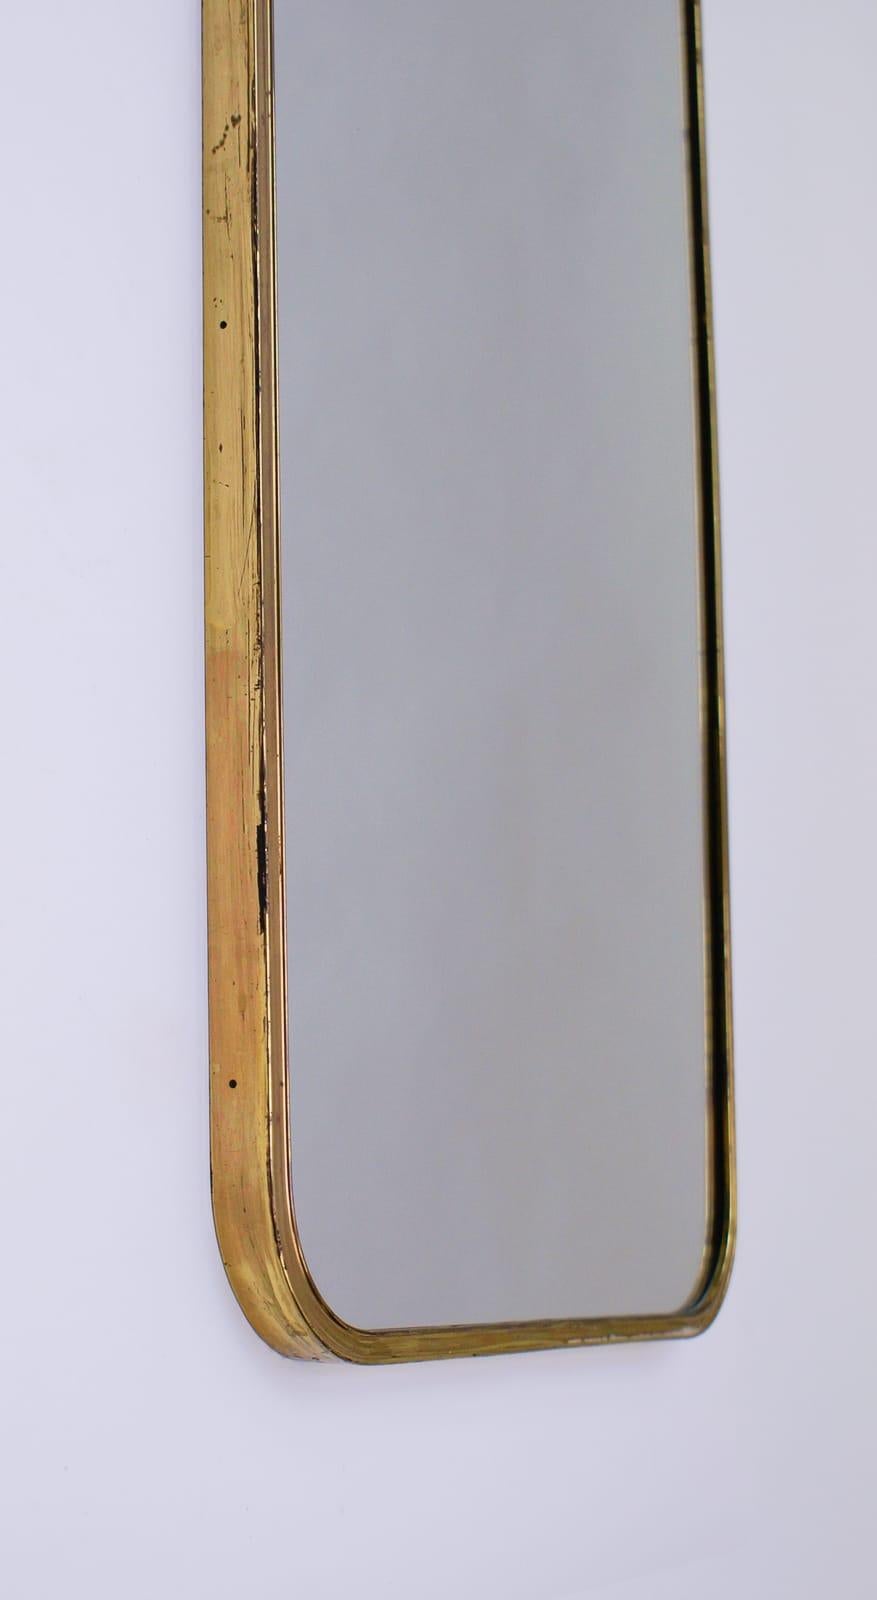 Heavy Large Italian Mid-Century Modern Brass Mirror from the 1950s 1